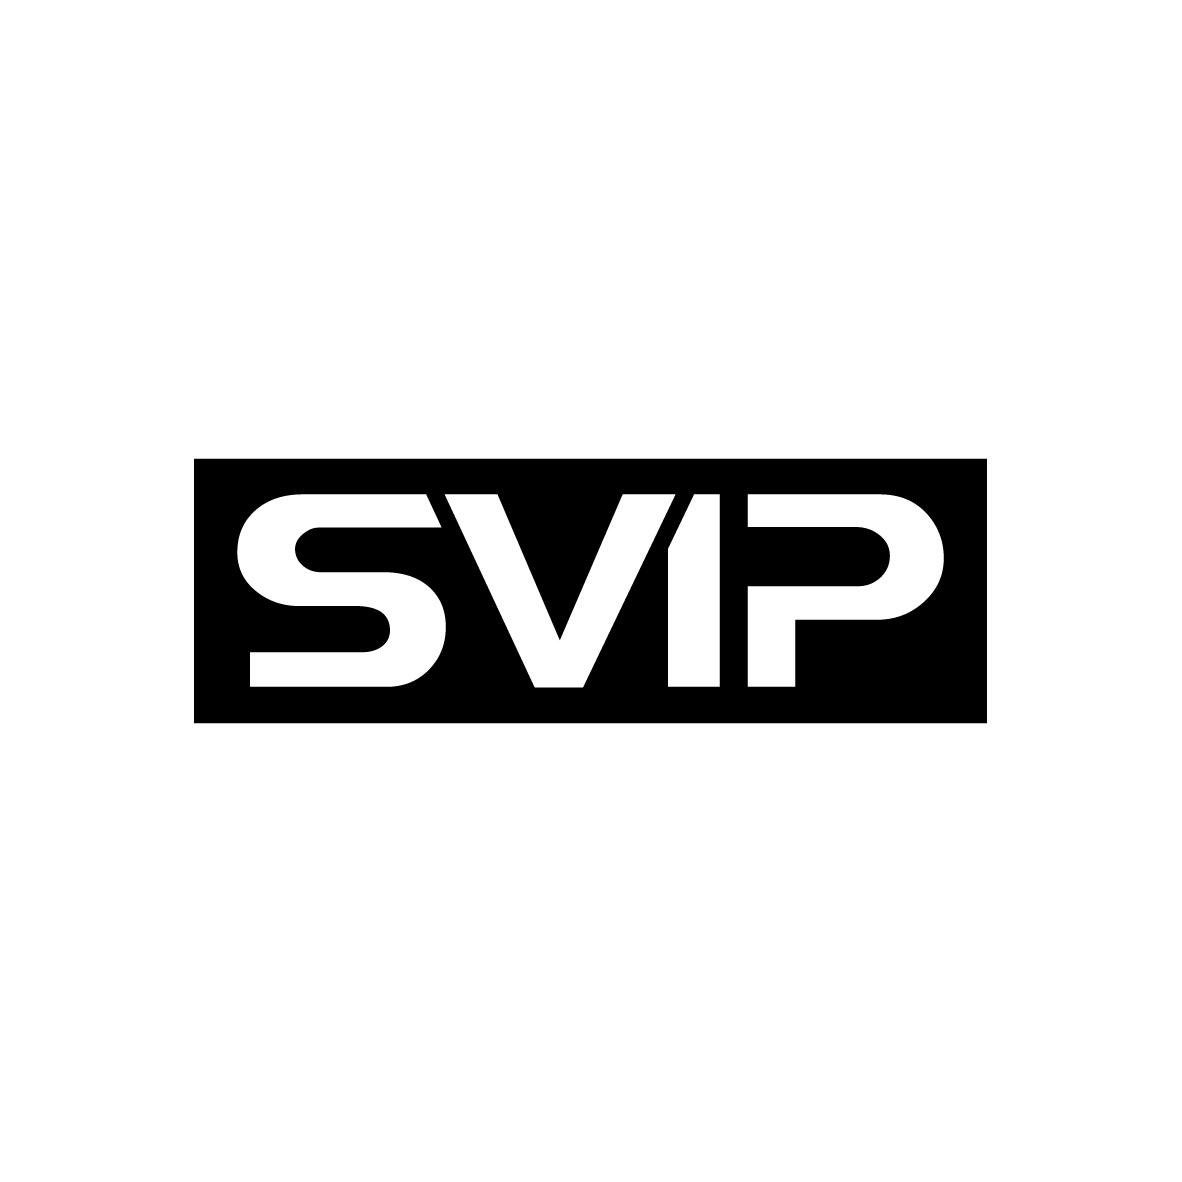 SVIP皮包商标转让费用买卖交易流程